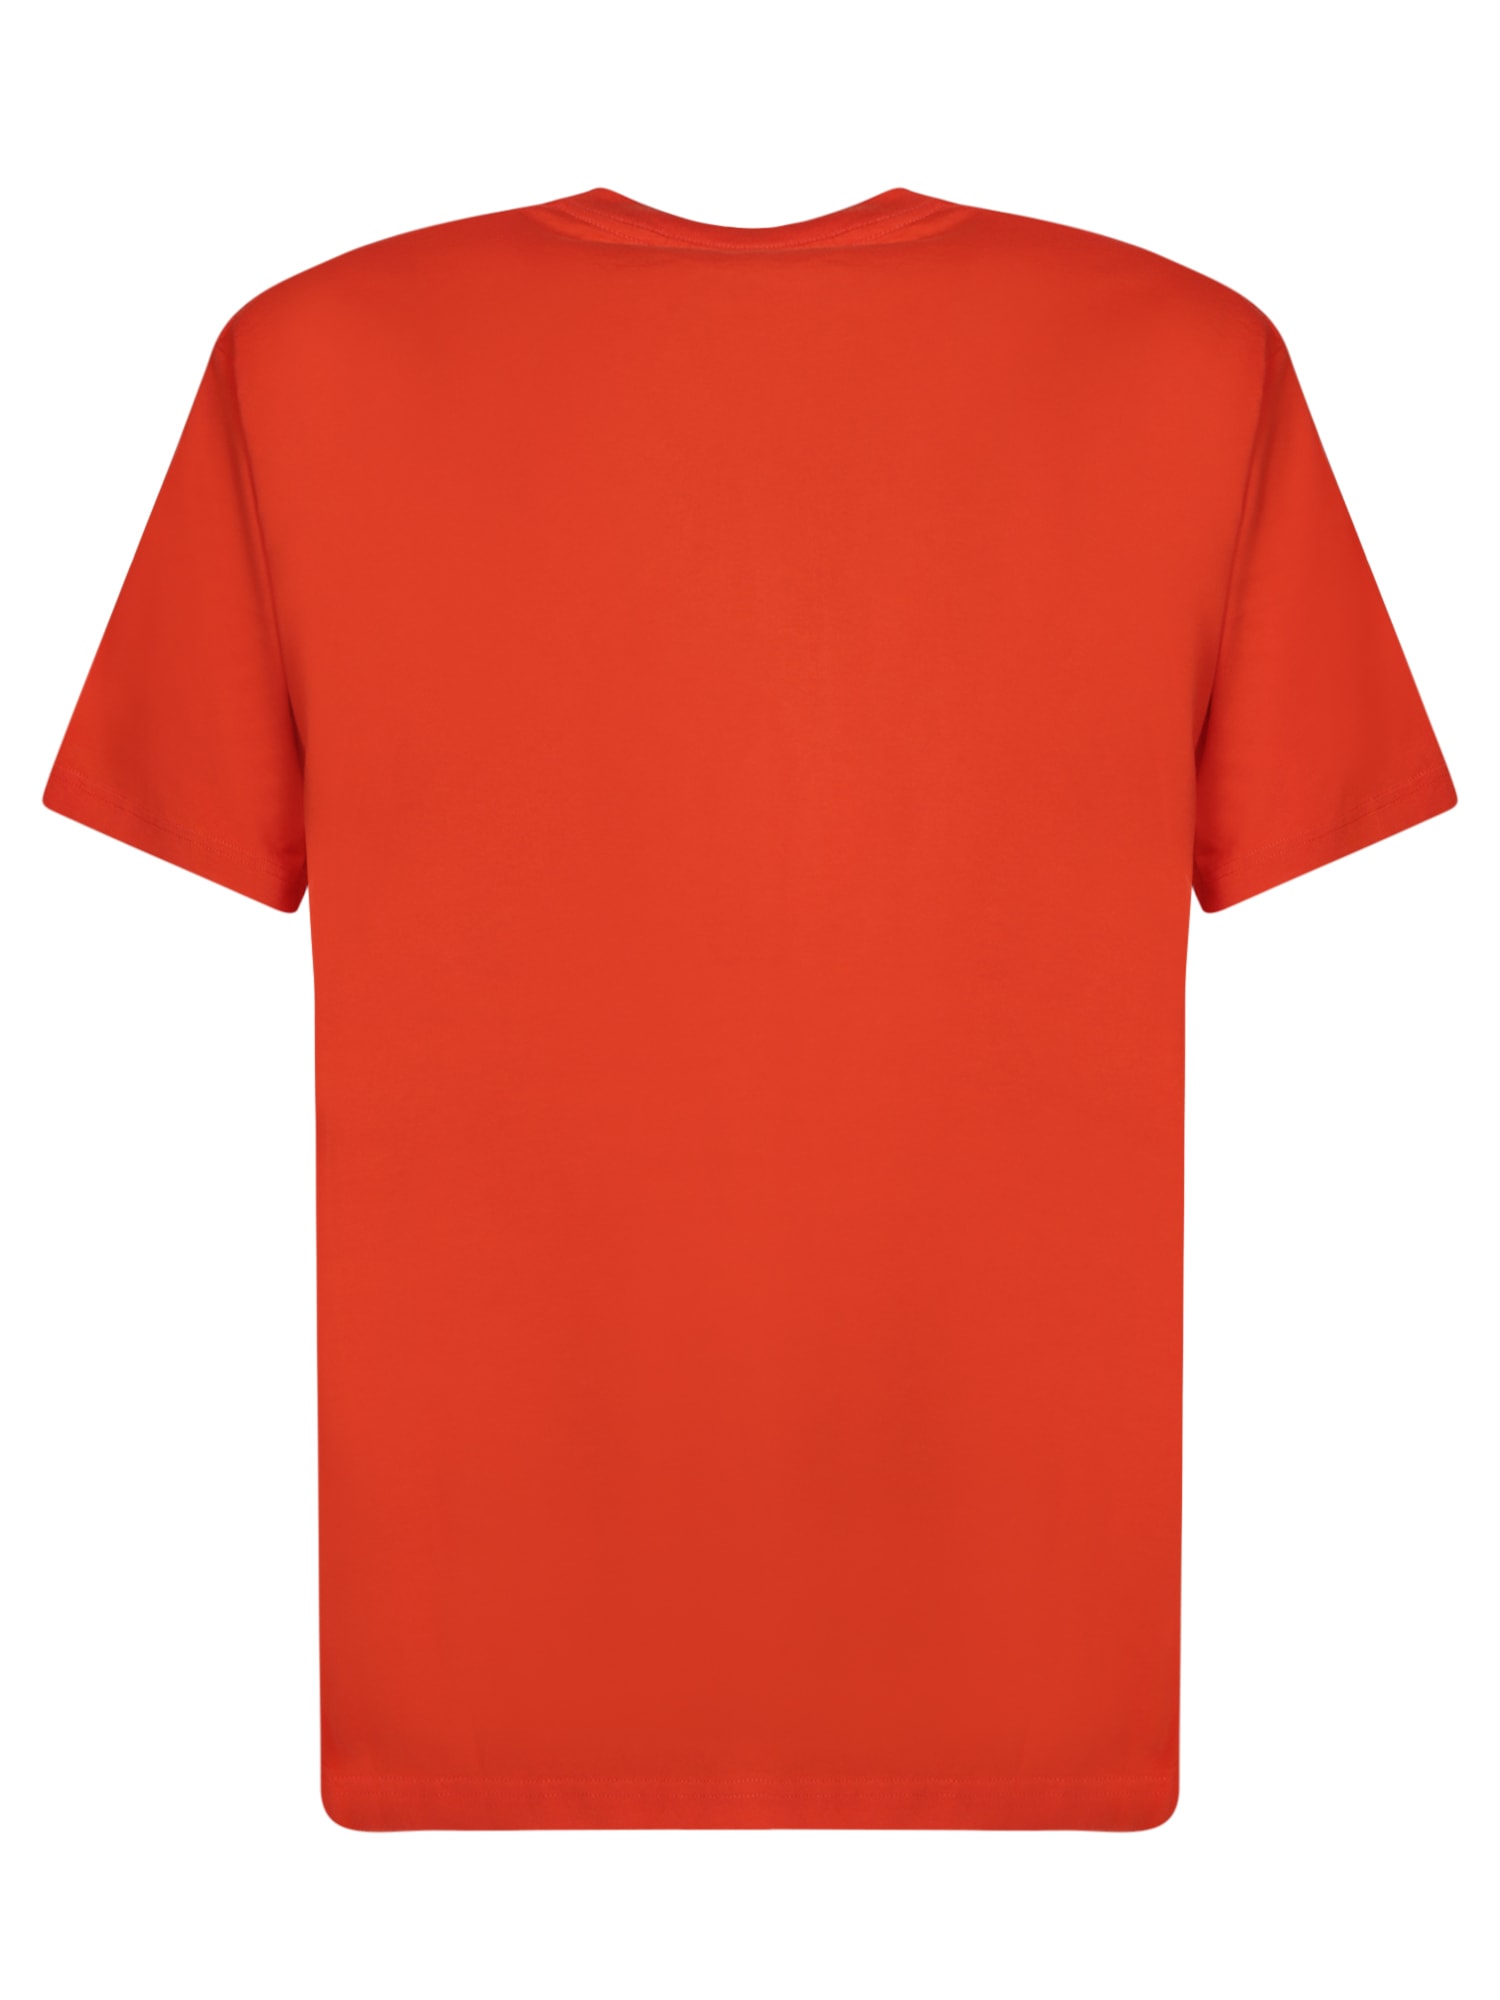 Shop Fuct Crossed  Orange T-shirt